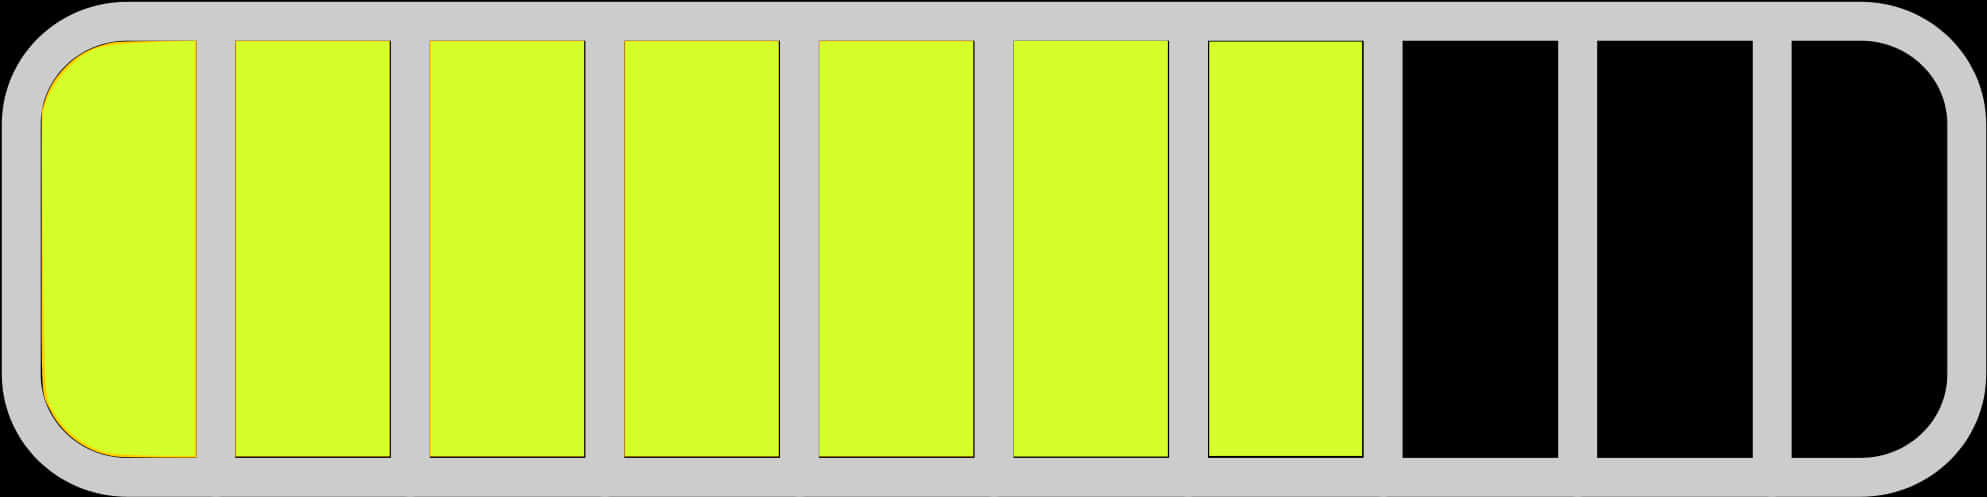 A Group Of Rectangular Yellow Rectangles